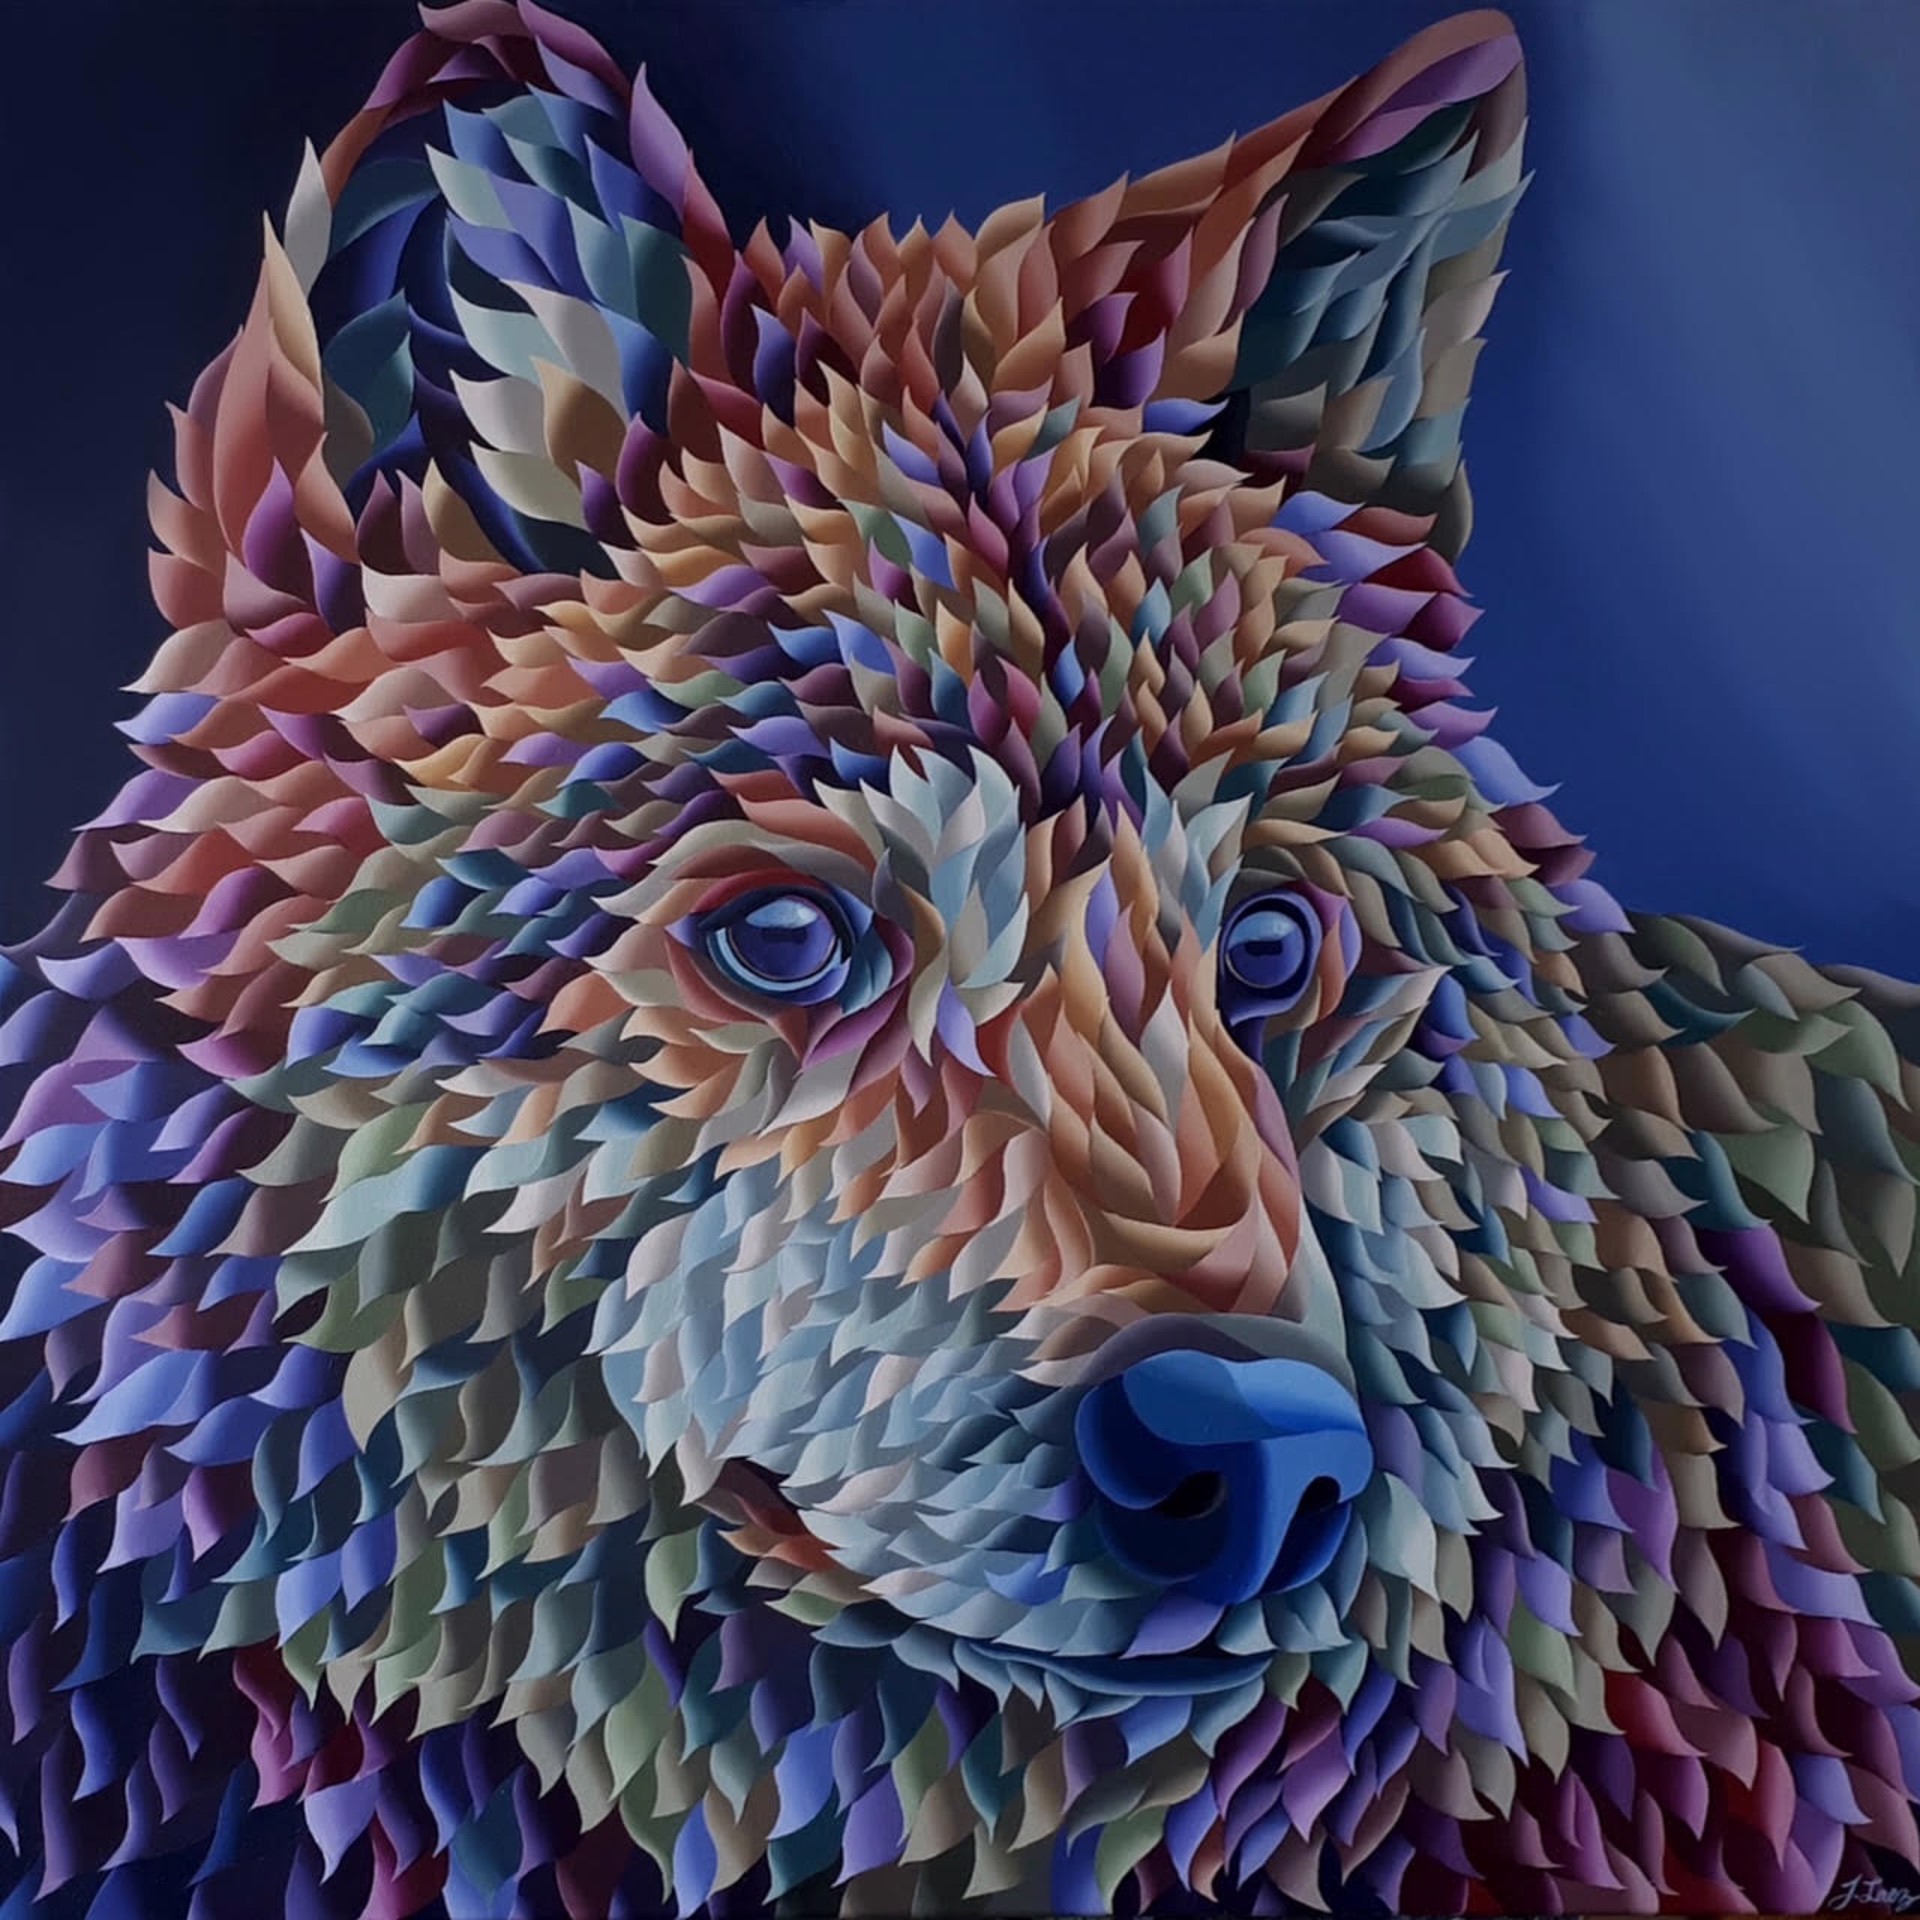 Commission - "Luna" Wolf by Jacqueline Inez